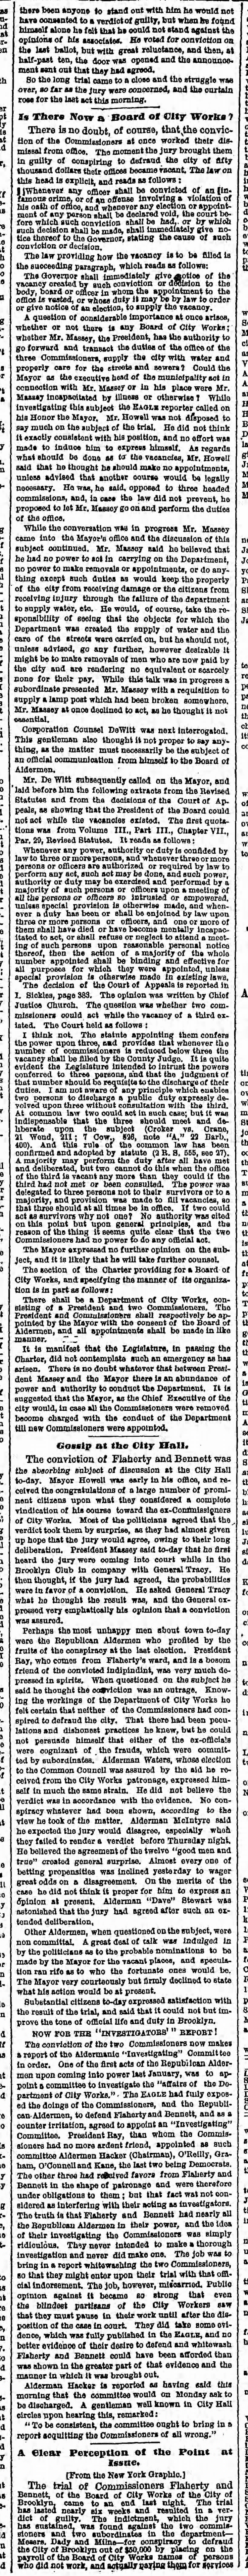 Saturday, May 17, 1879 - Page 4 - 3 of 4